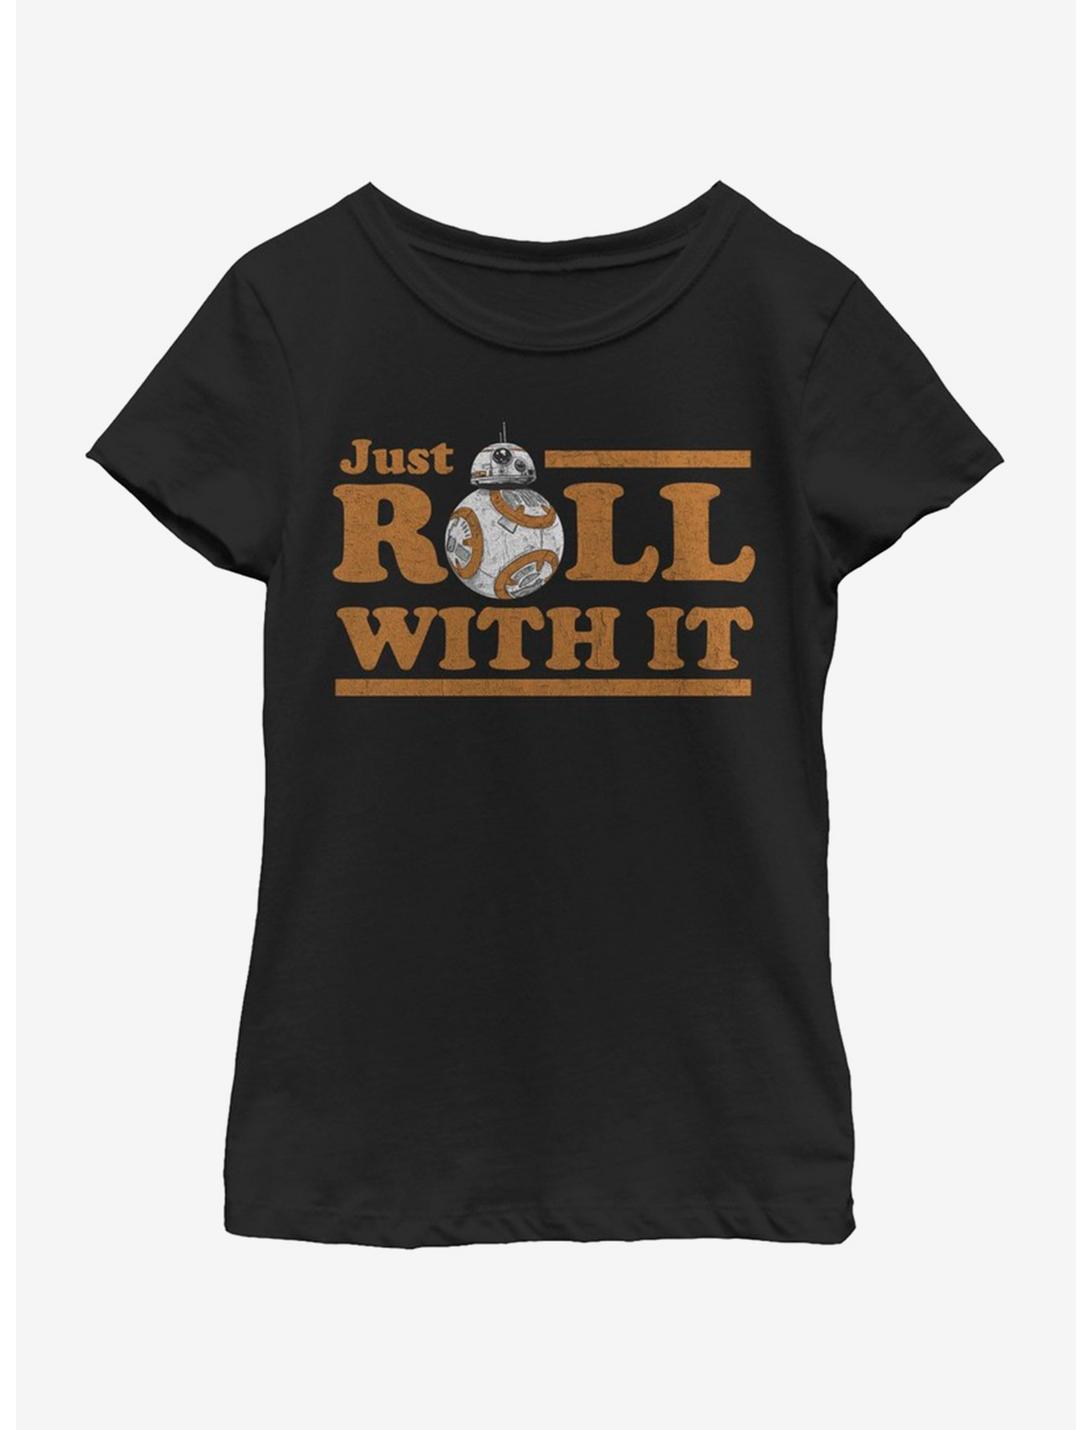 Star Wars The Last Jedi Just Roll Youth Girls T-Shirt, BLACK, hi-res